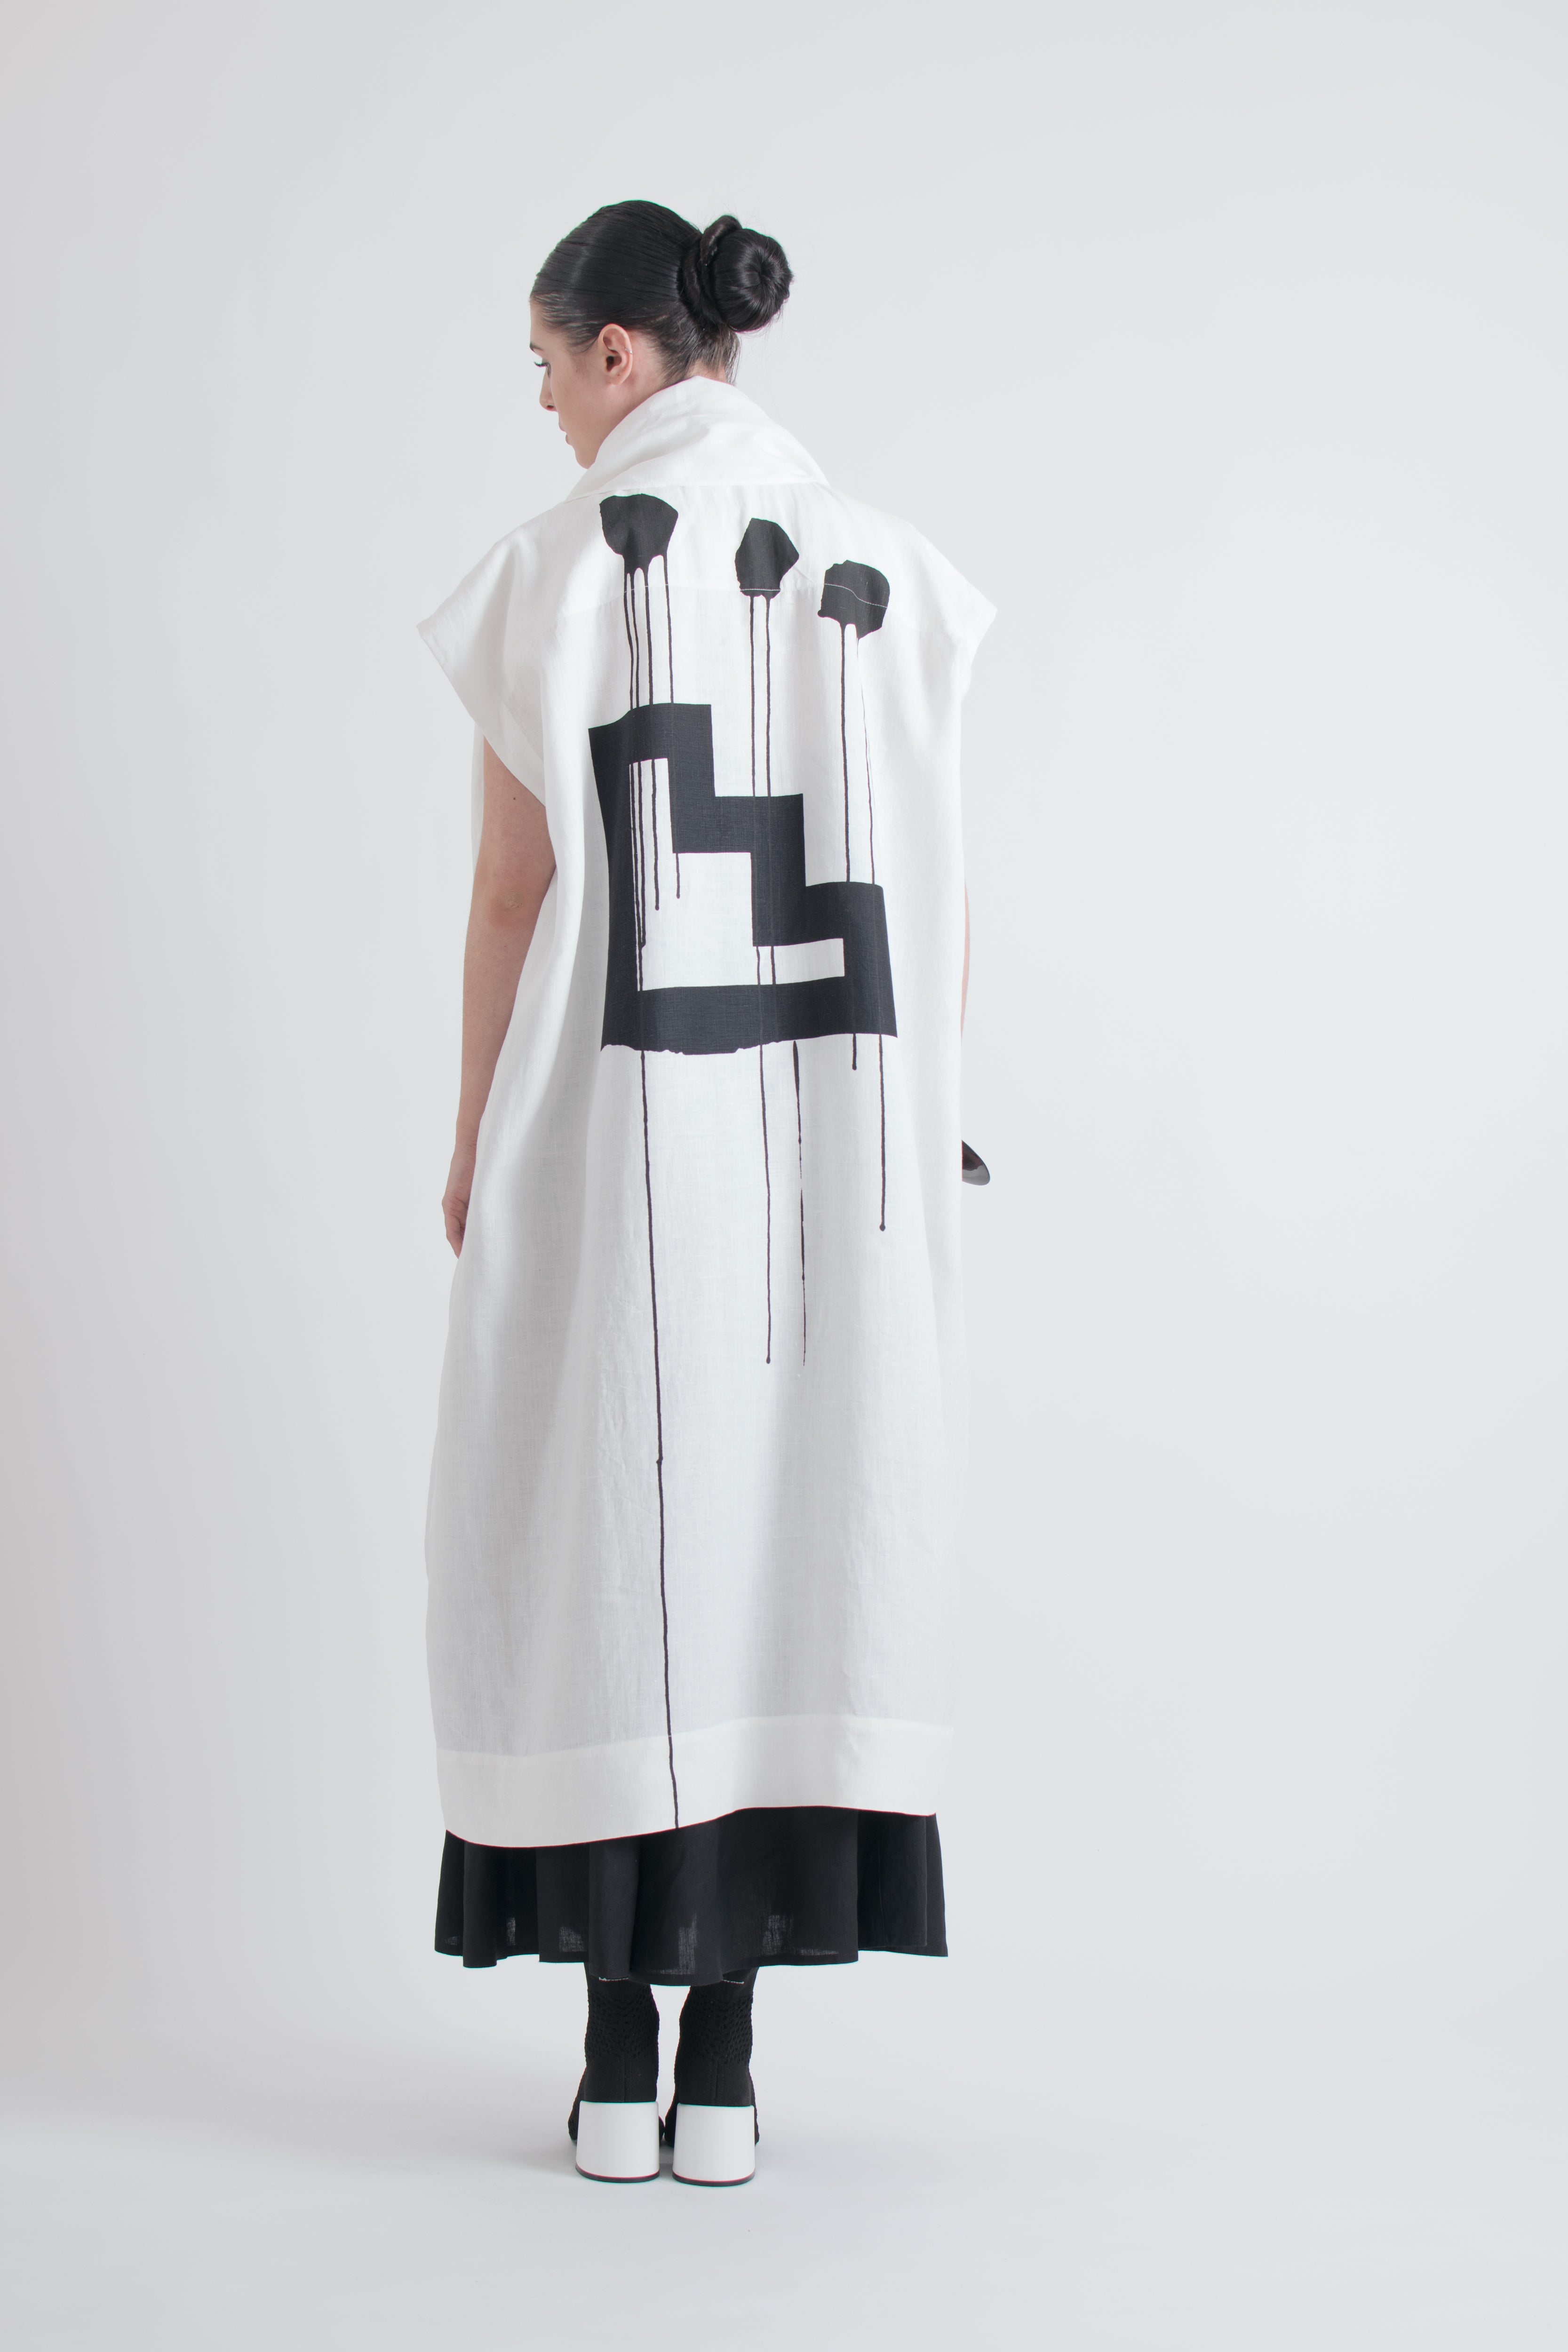 Issey Miyake Ikko Tanaka Graphic Print Linen Robe with Built In Scarf